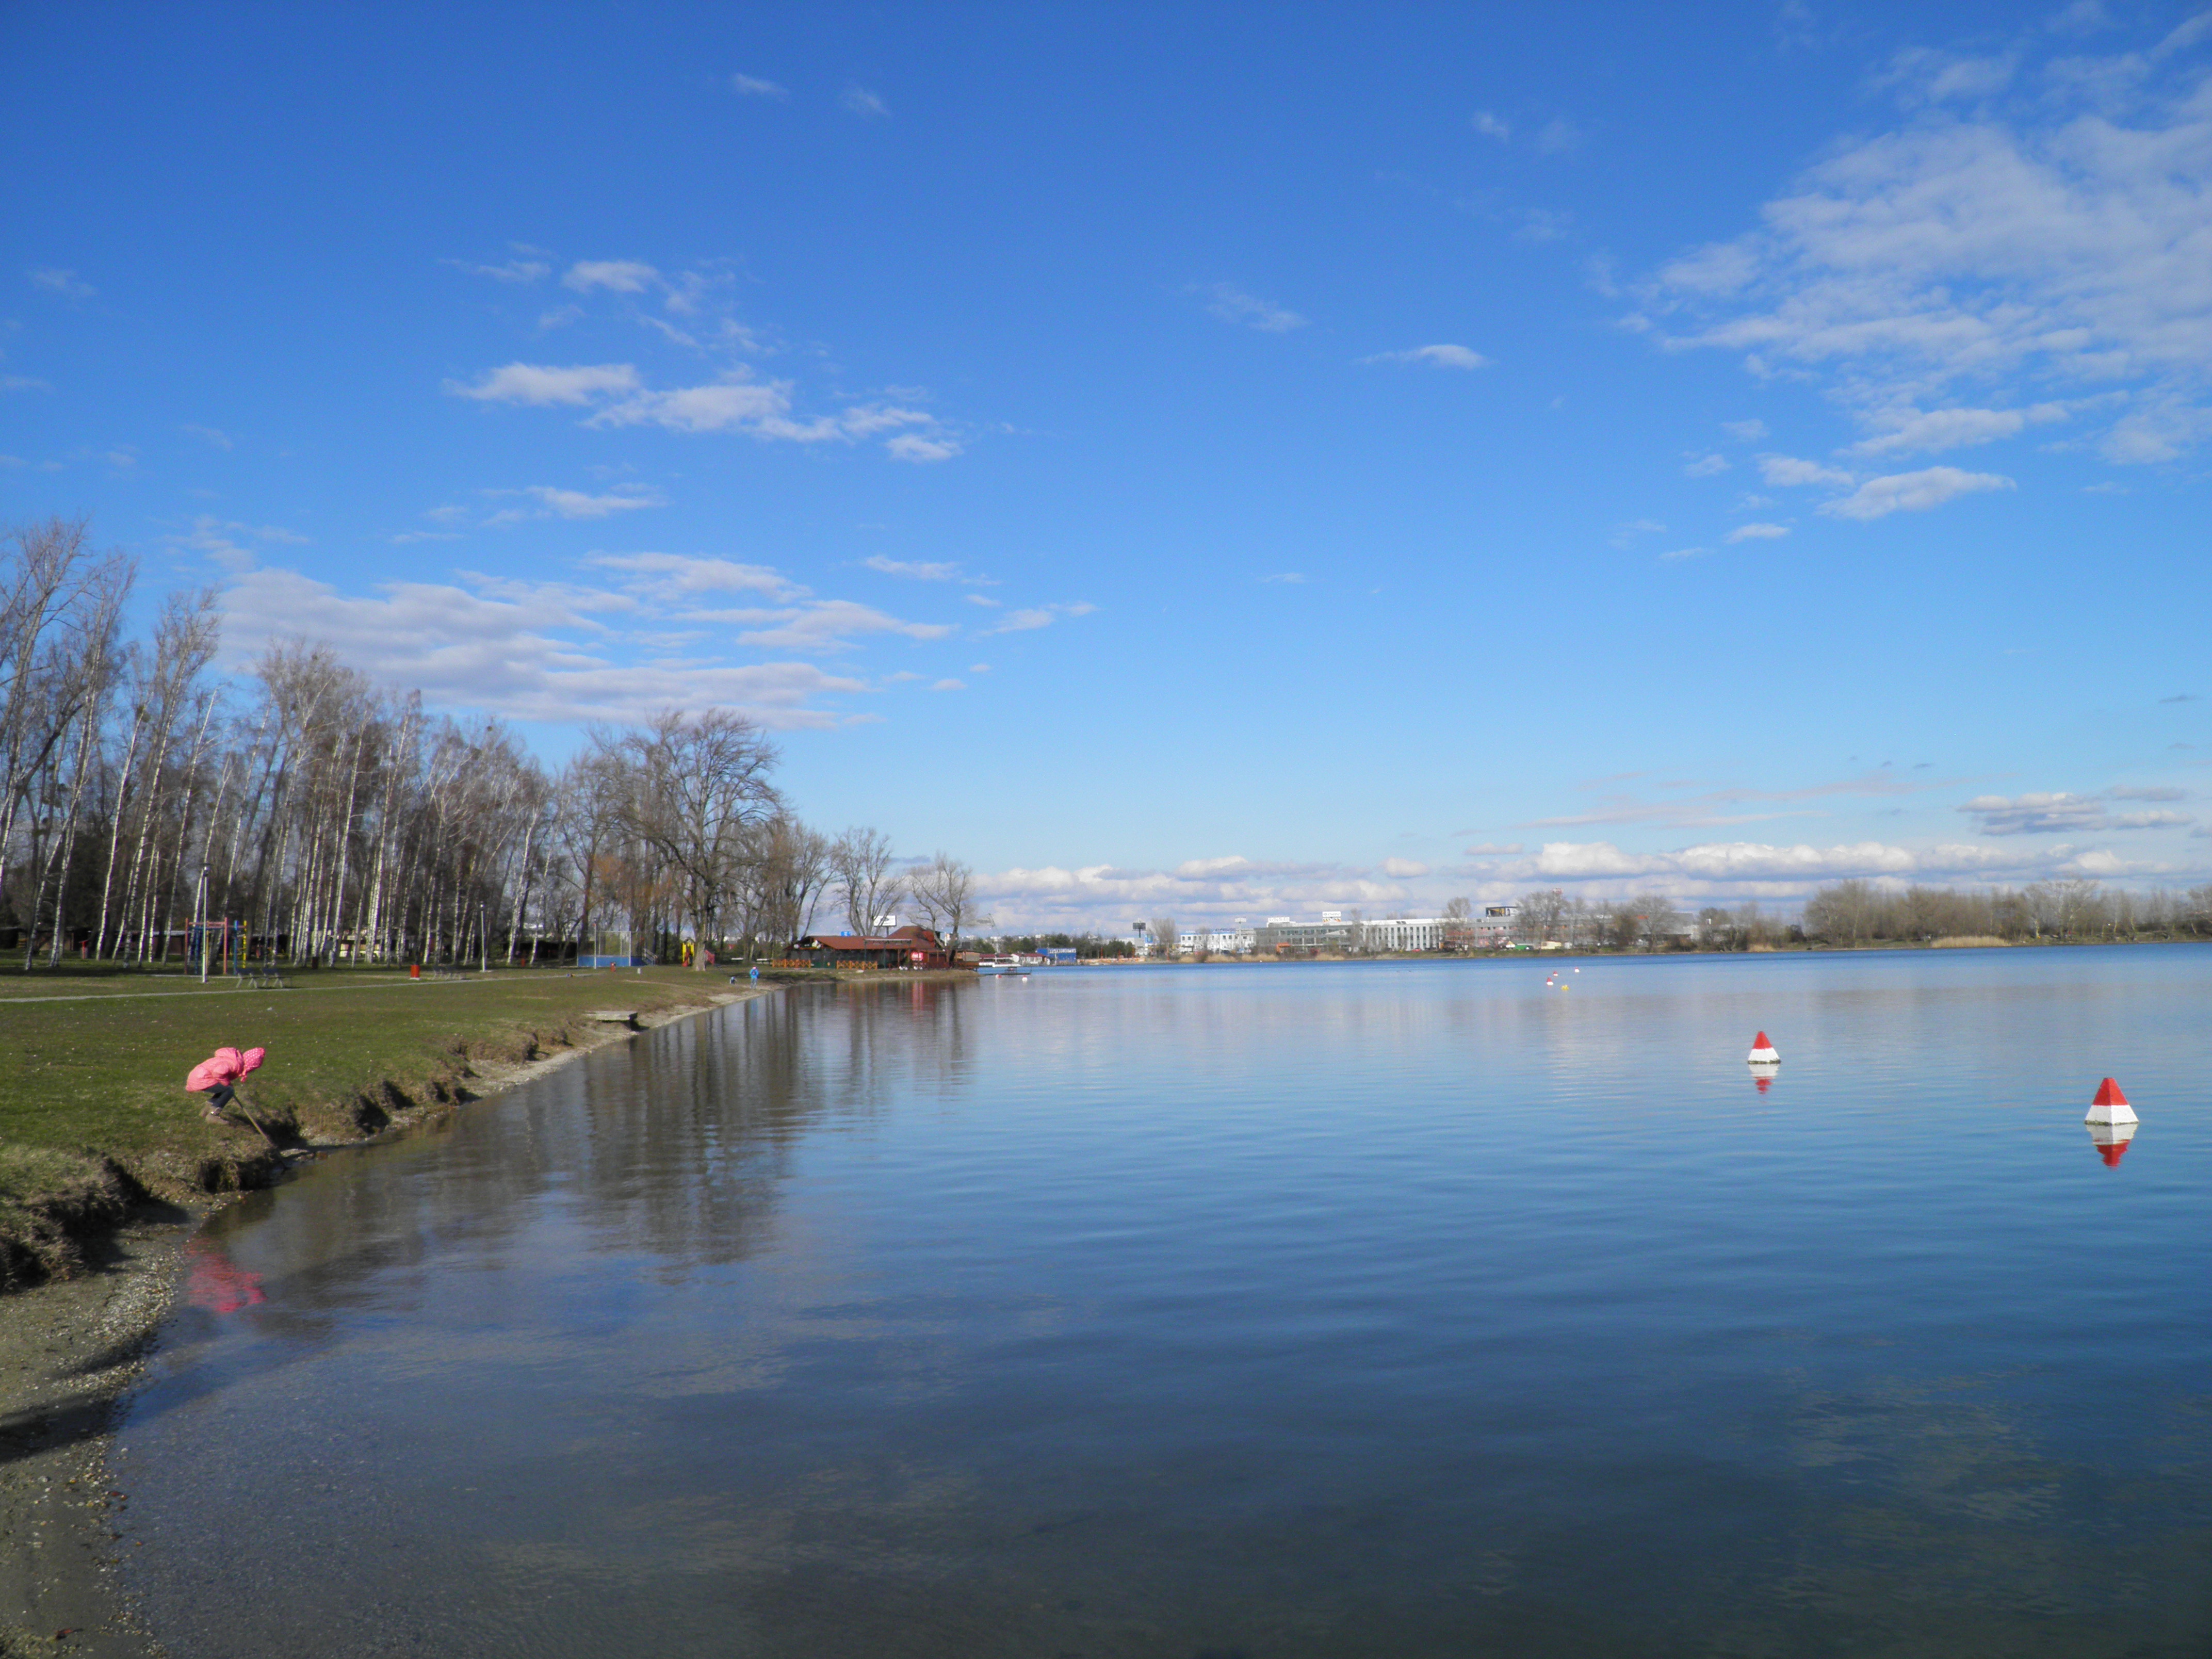 Na jazere Zlaté piesky pri Bratislave 6.III.2016, o 15. h. Tvo 6,1 °C, Tvz 10 °C.